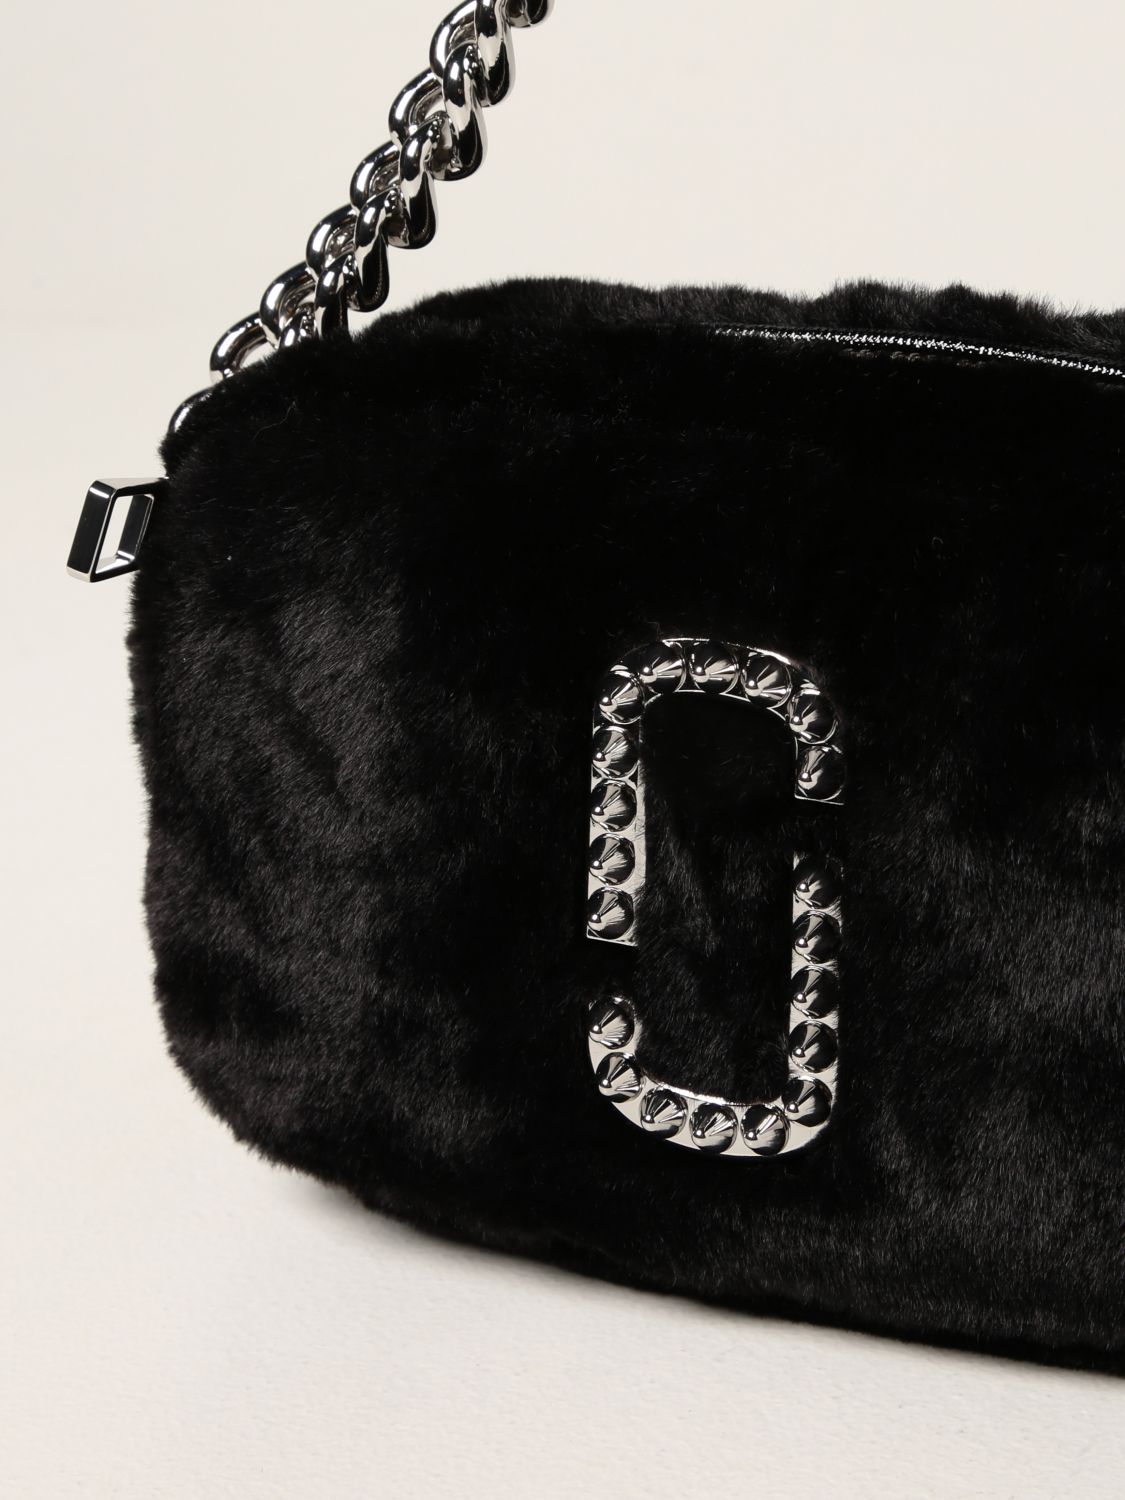 Marc Jacobs The Snapshot Black Studded Bag